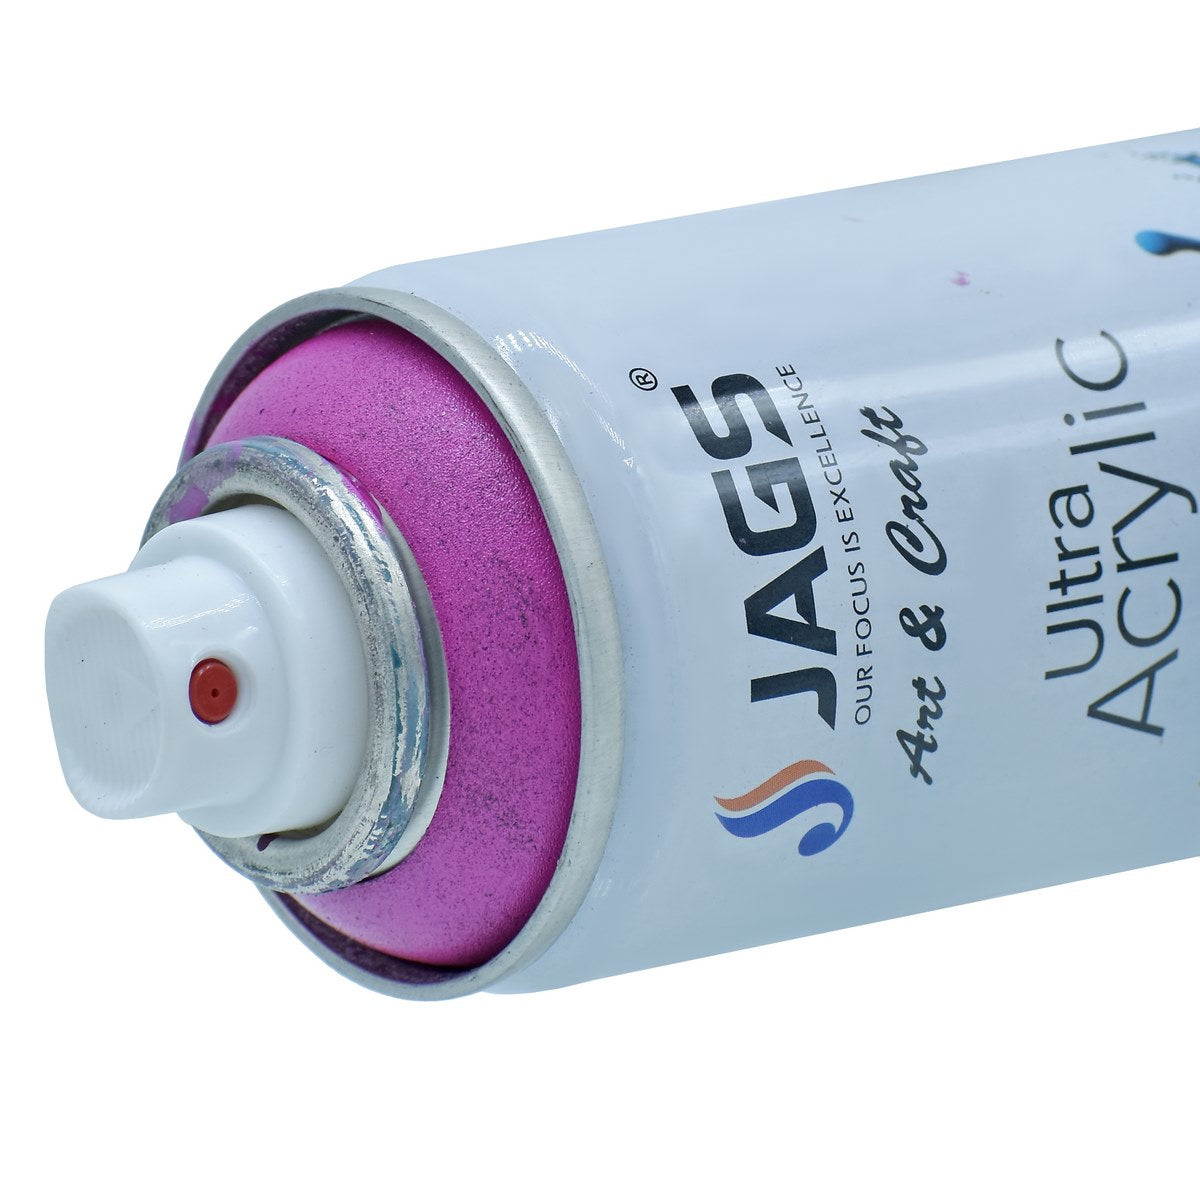 jags-mumbai Paint & Colours Jags Spray Ultra Acrylic 150ml Light Pink 4003